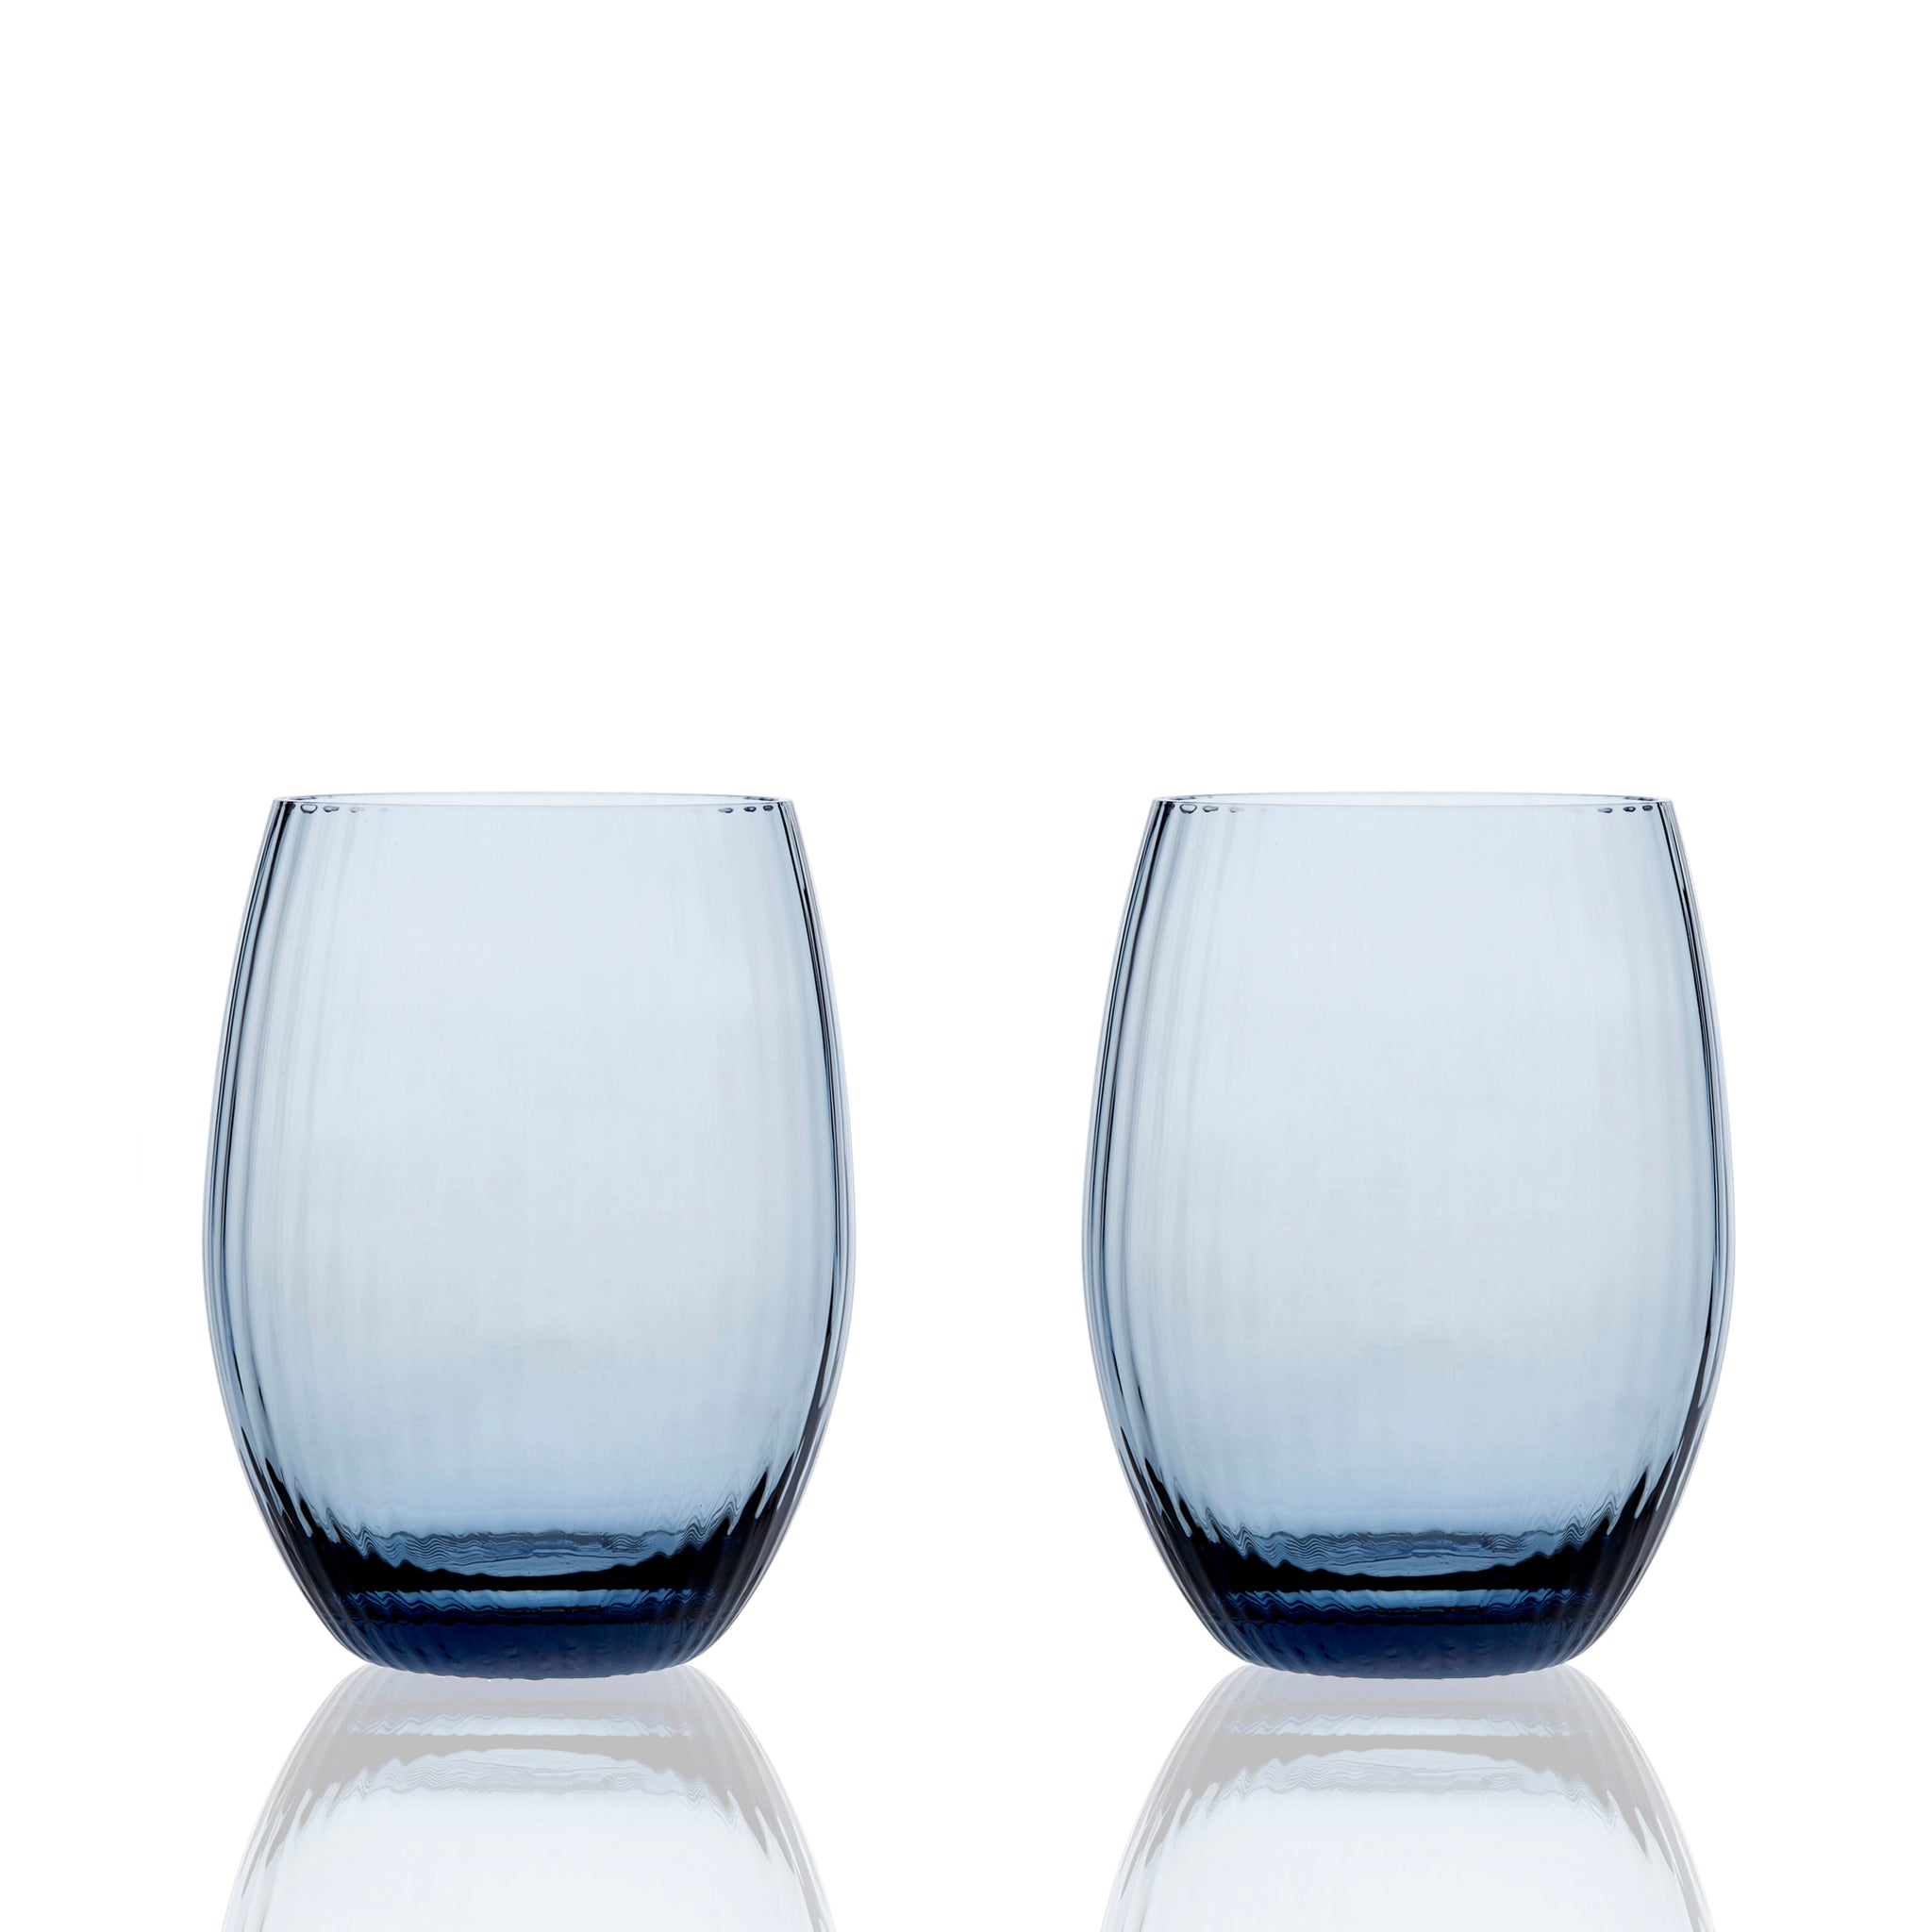 Glass 18oz Holiday Stemless Wine Glasses Set/4